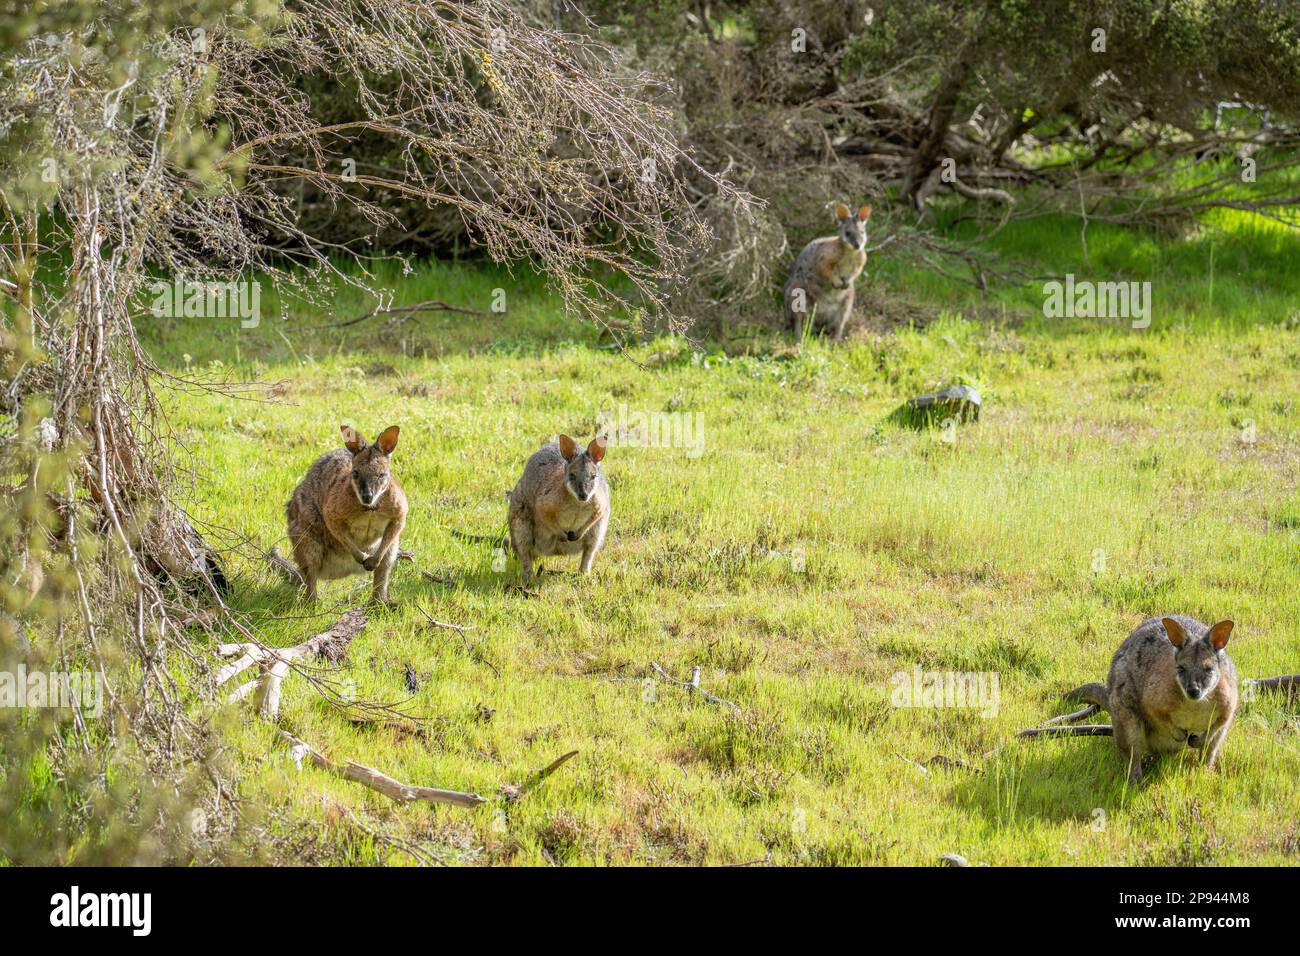 Derby wallaby, Notamacropus eugenii, Kangaroo Island, South Australia, Australia Stock Photo